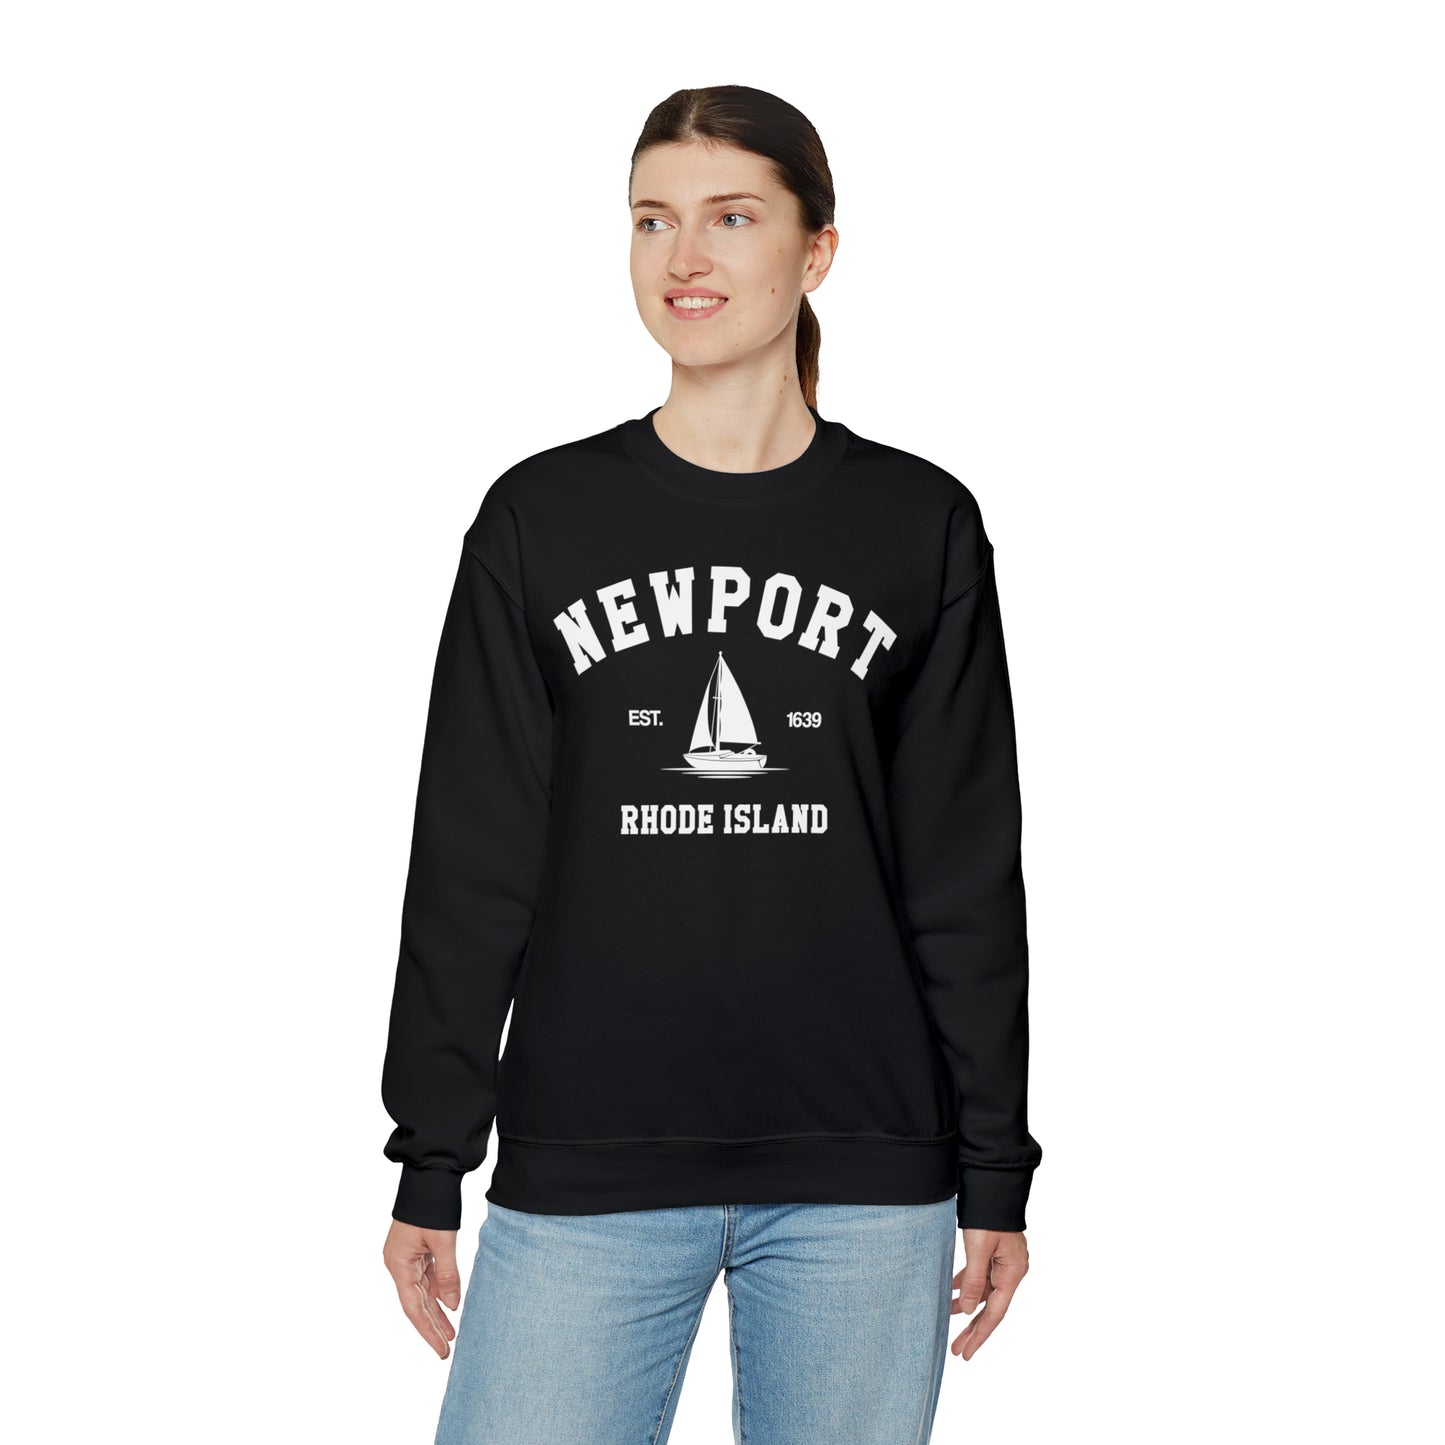 Newport RI Sweatshirt, Vintage Rhode Island Sailing Boating Beach Town Graphic Crewneck Sweater Jumper Pullover Men Women Aesthetic Top Starcove Fashion